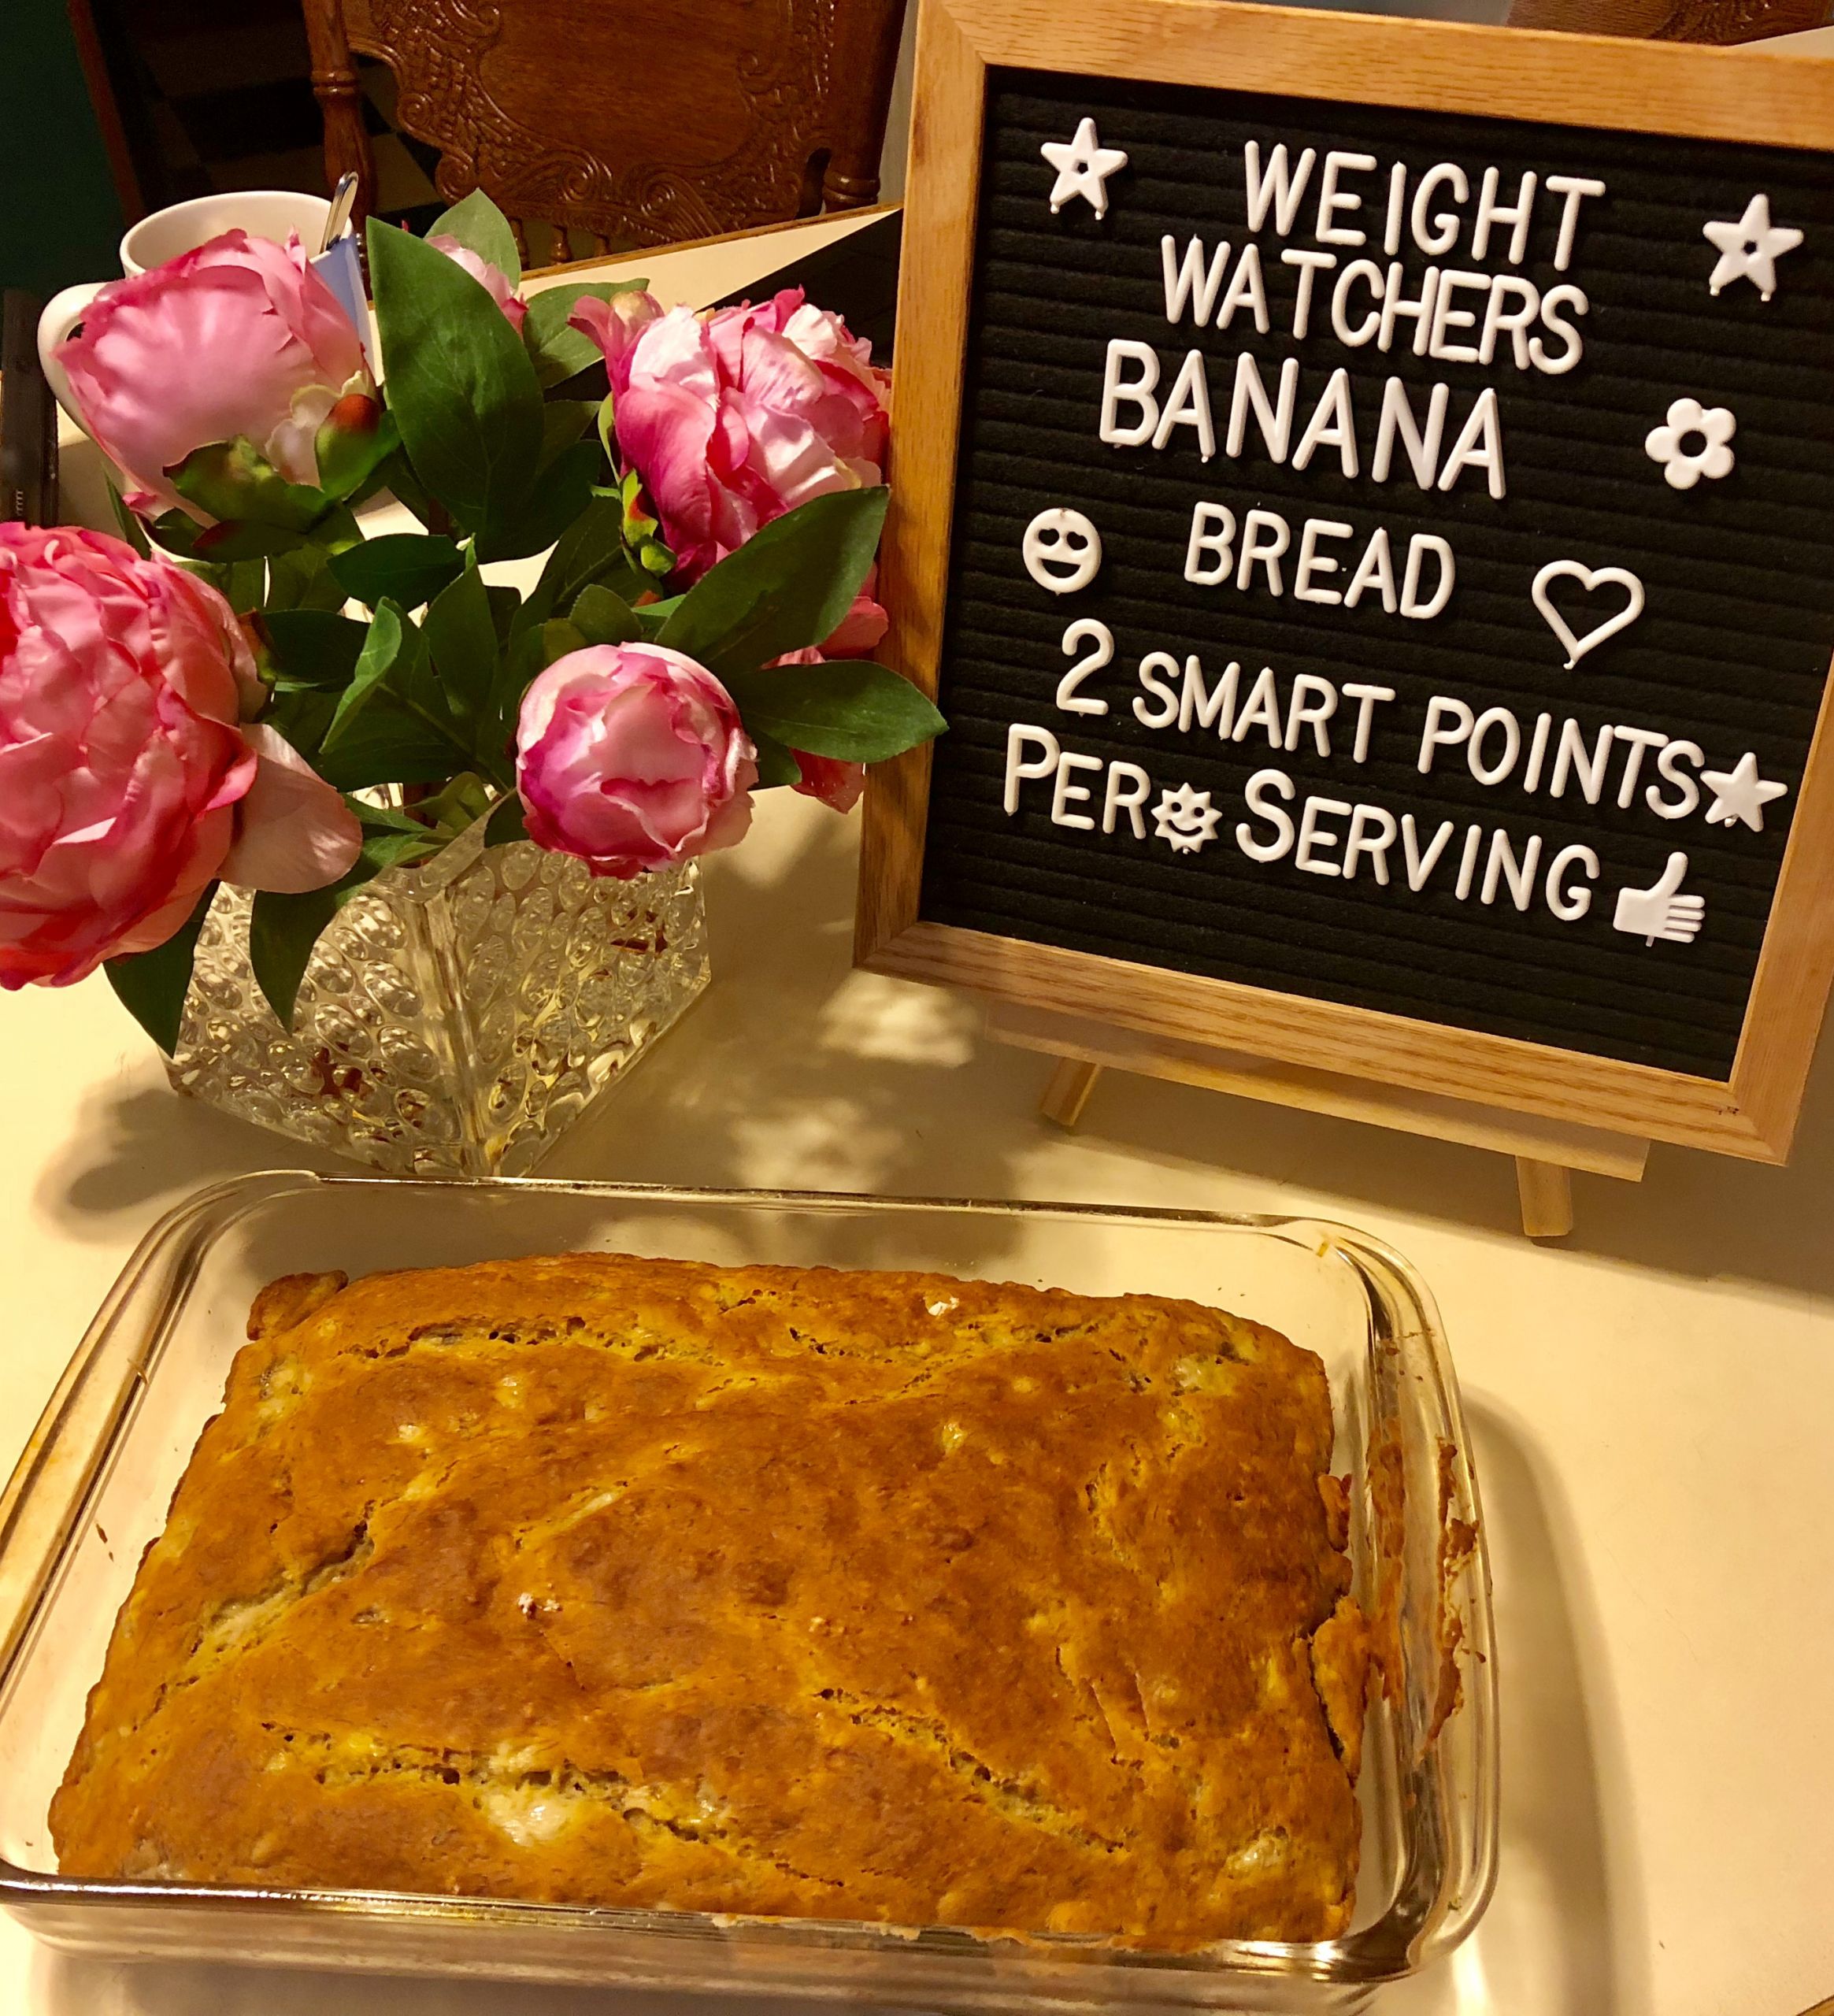 Weight Watcher Banana Bread Recipes
 Weight watchers banana bread recipe